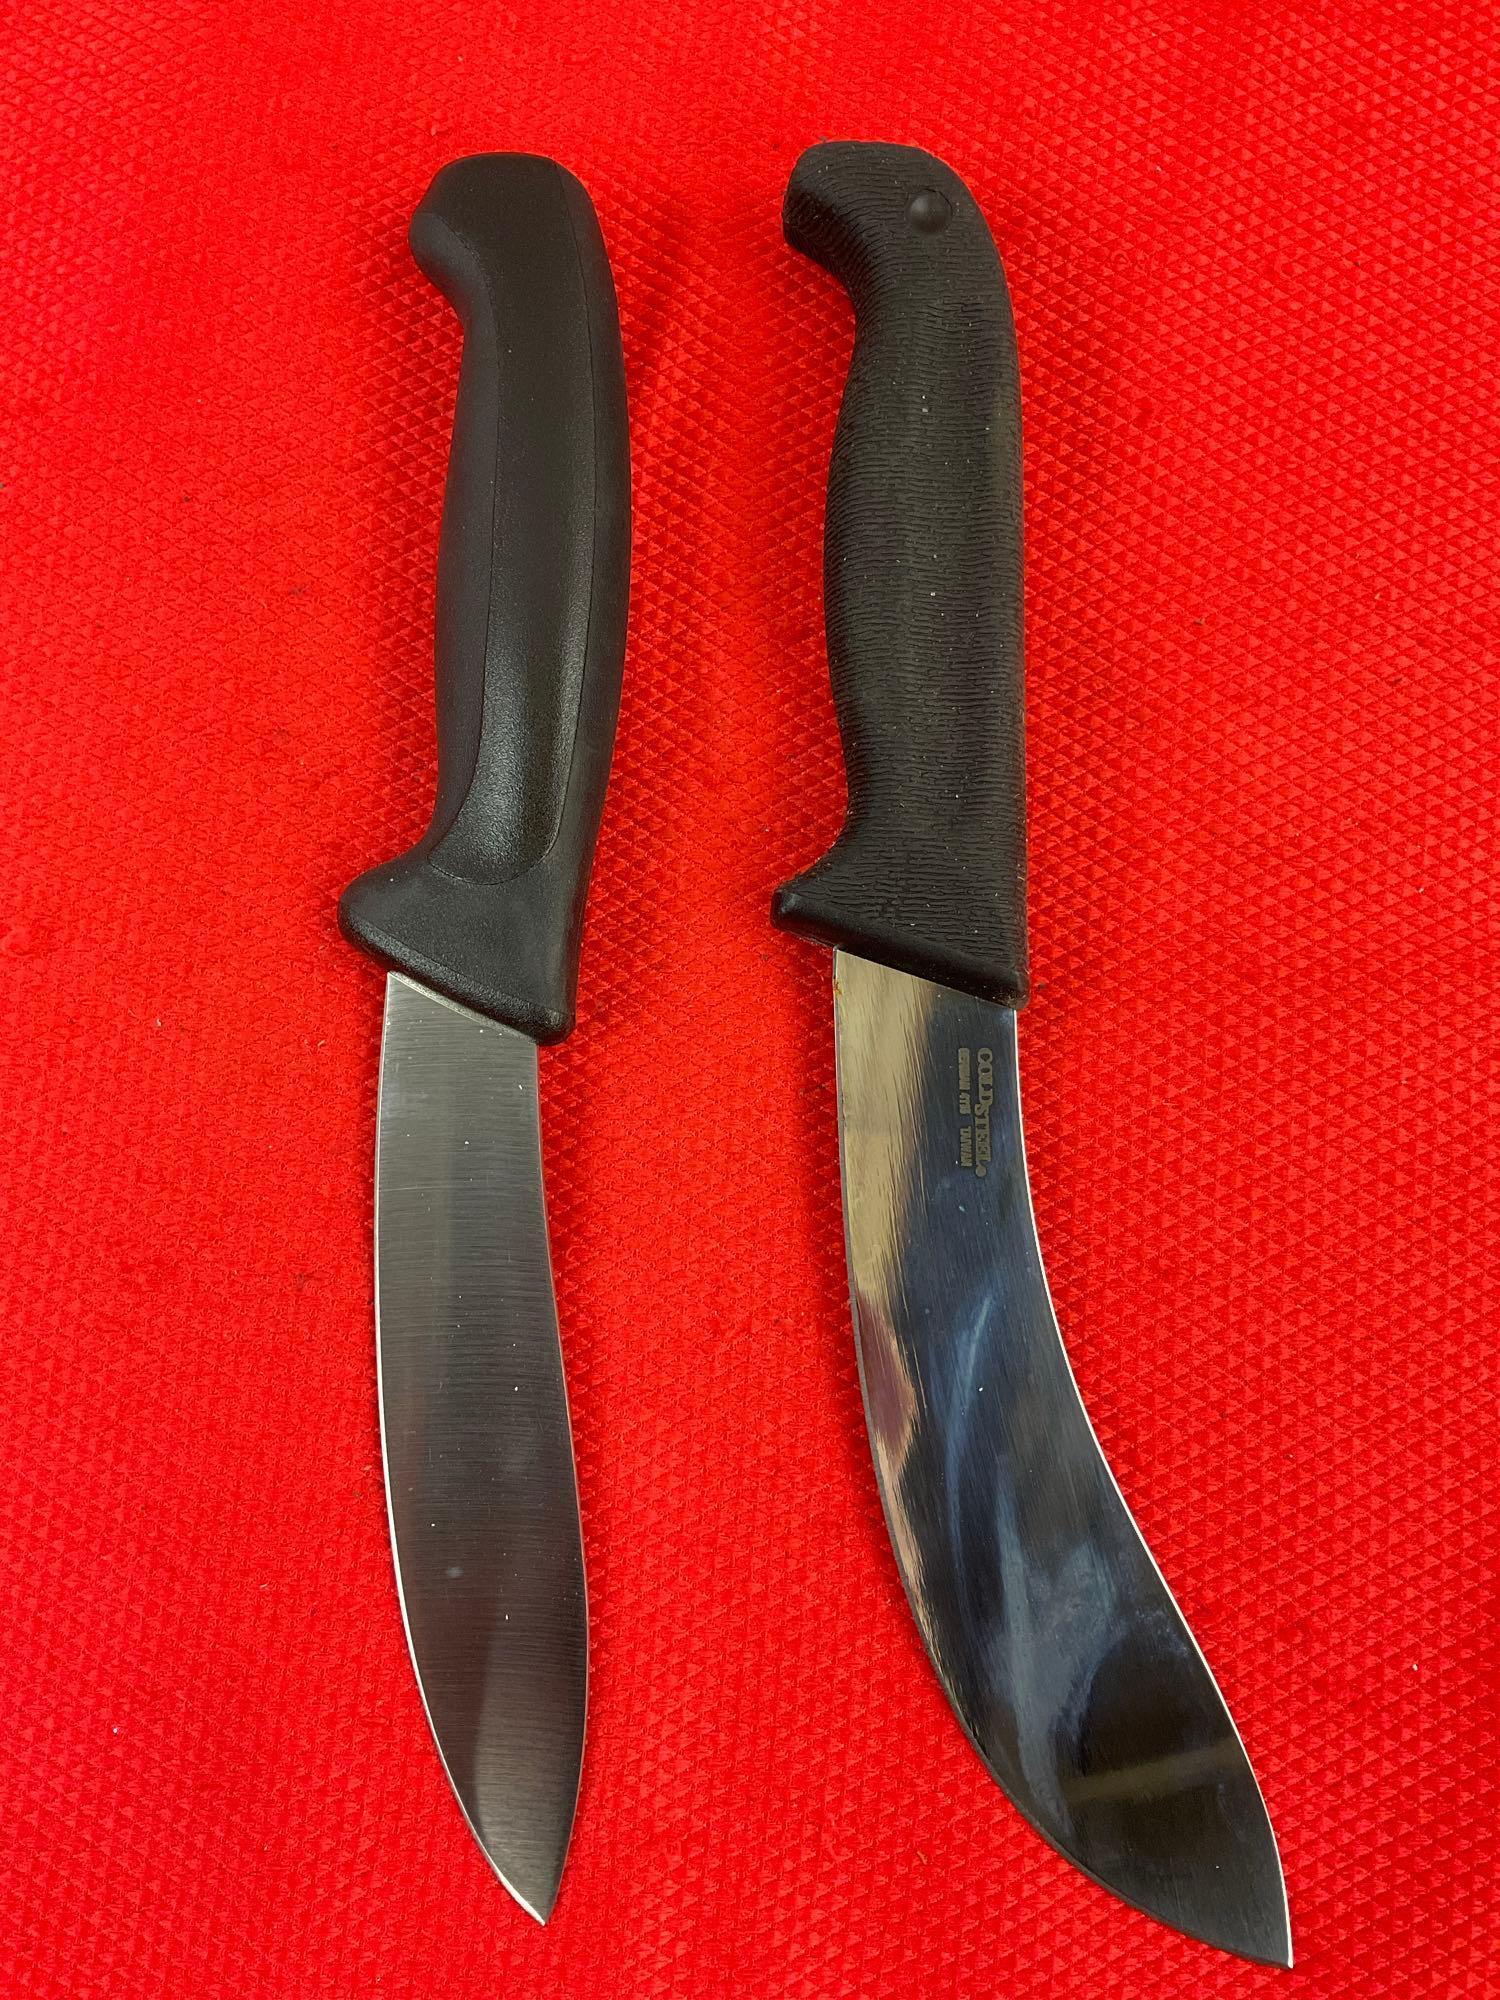 2 pcs Modern Steel Fixed Blade Knives. 1x Cold Steel 20VBSKZ, 1x Mundial MA49-5. See pics.